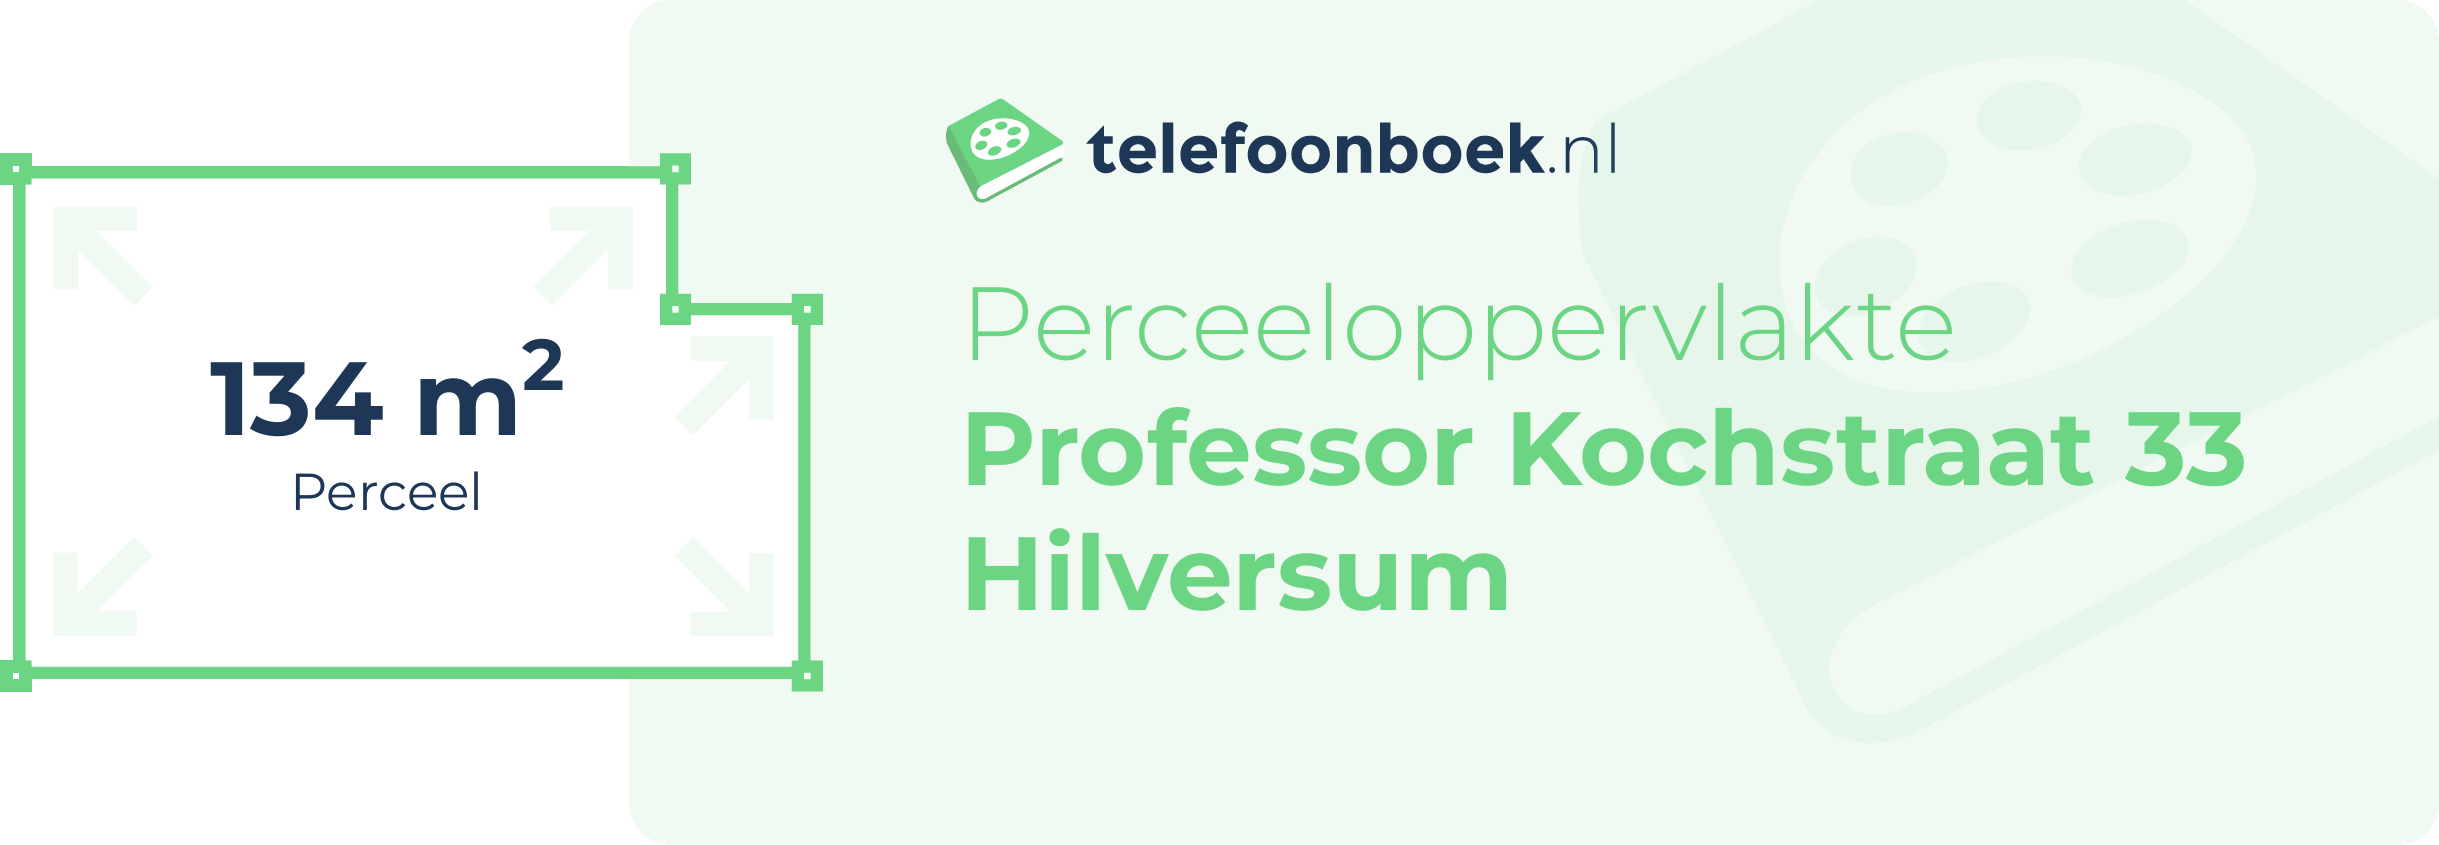 Perceeloppervlakte Professor Kochstraat 33 Hilversum